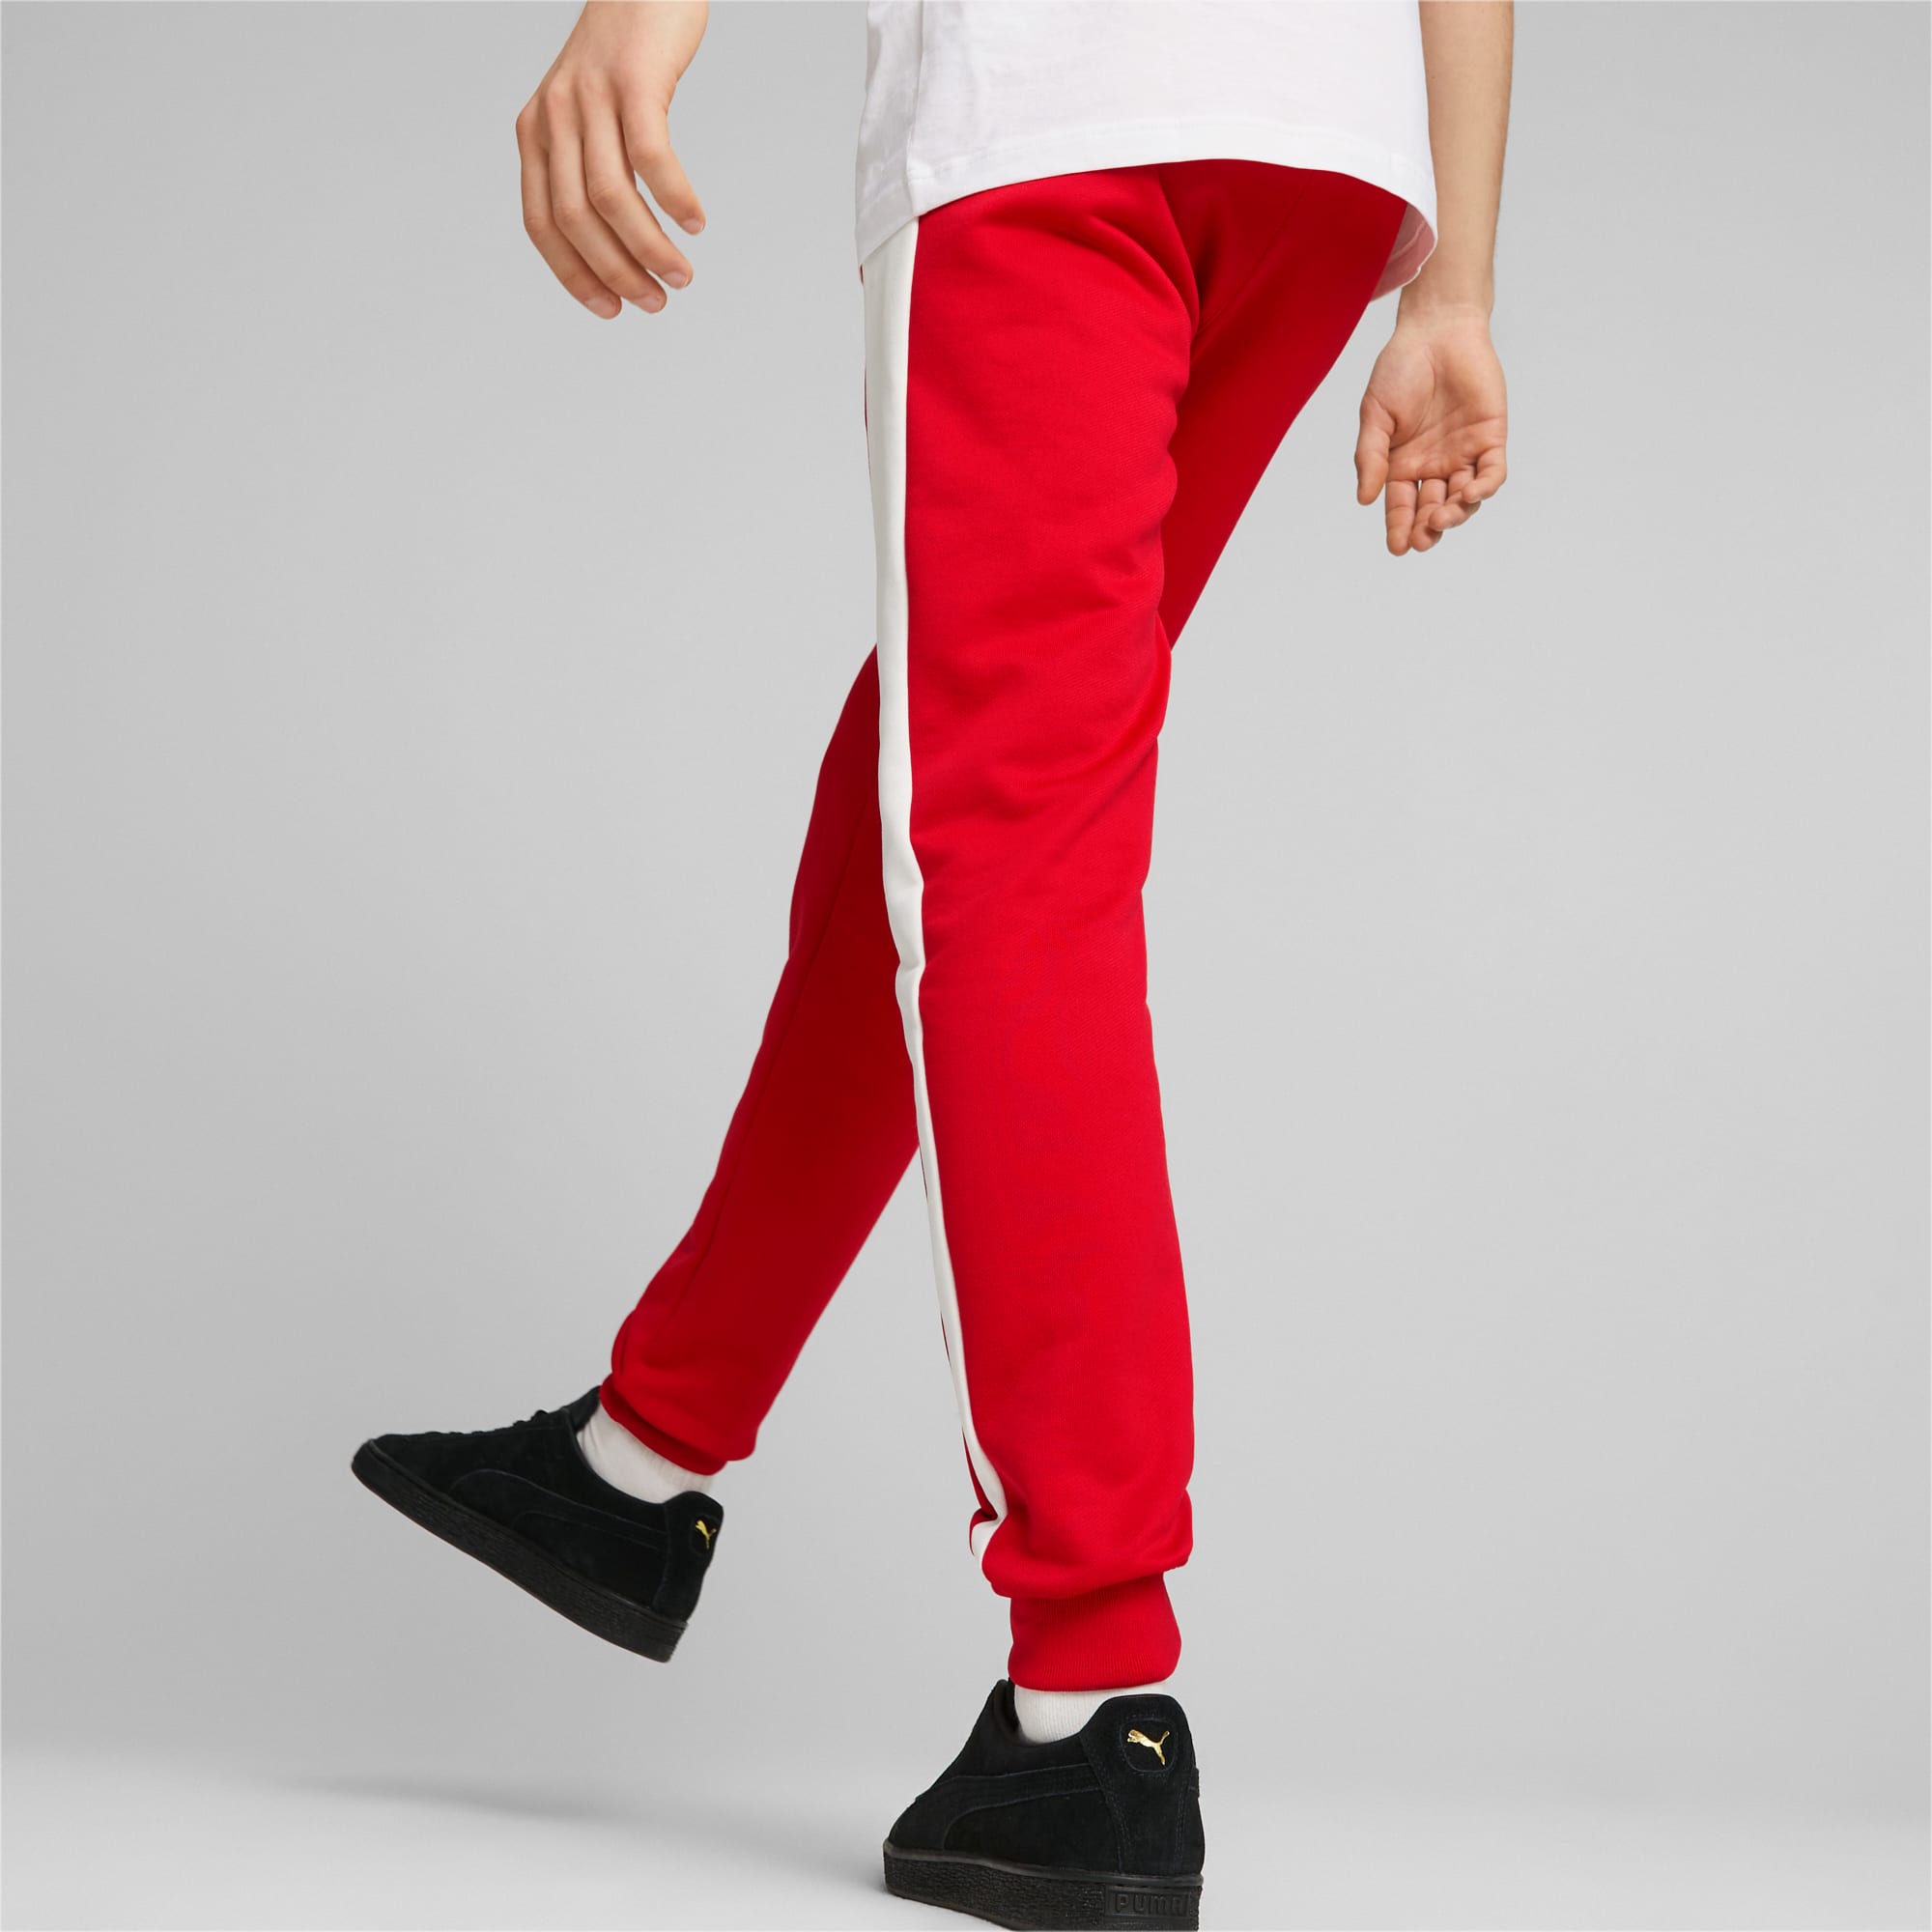 PUMA Pantalones De Chándal T7 Iconic Para Hombre, Rojo